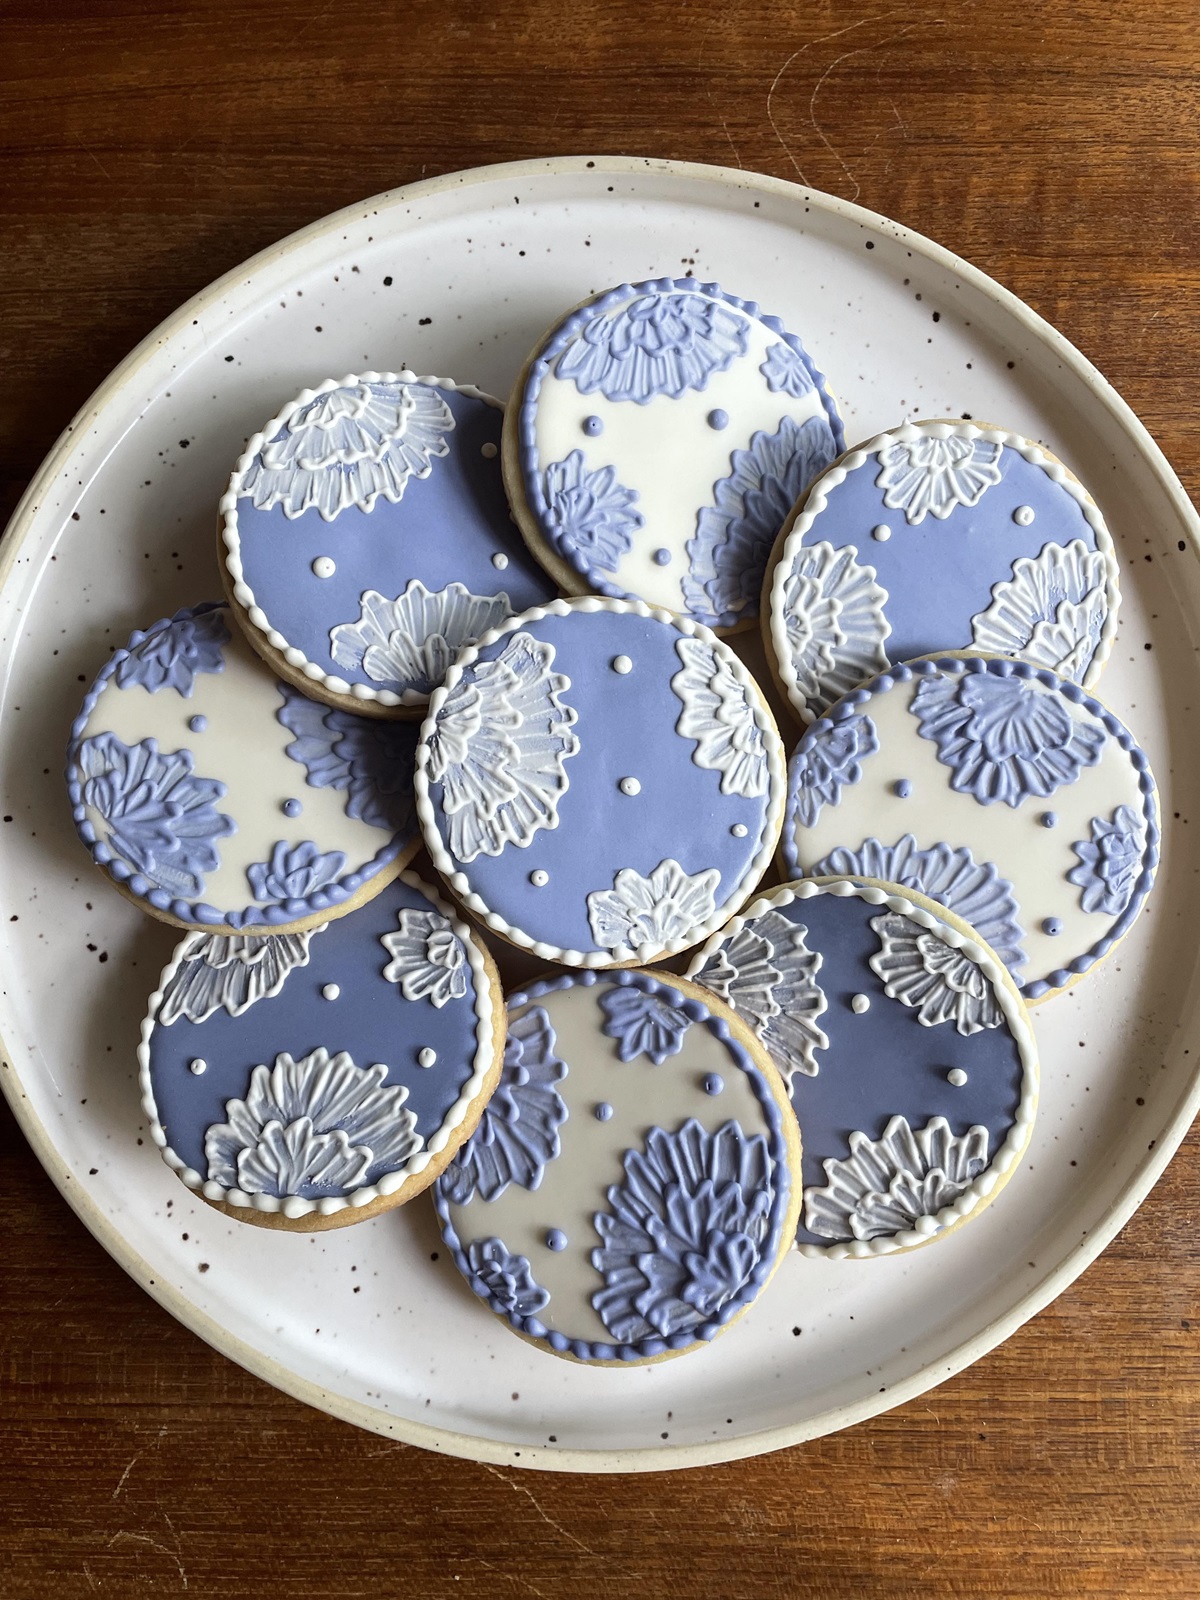 Homemade Sugar Cookies With Royal Icing